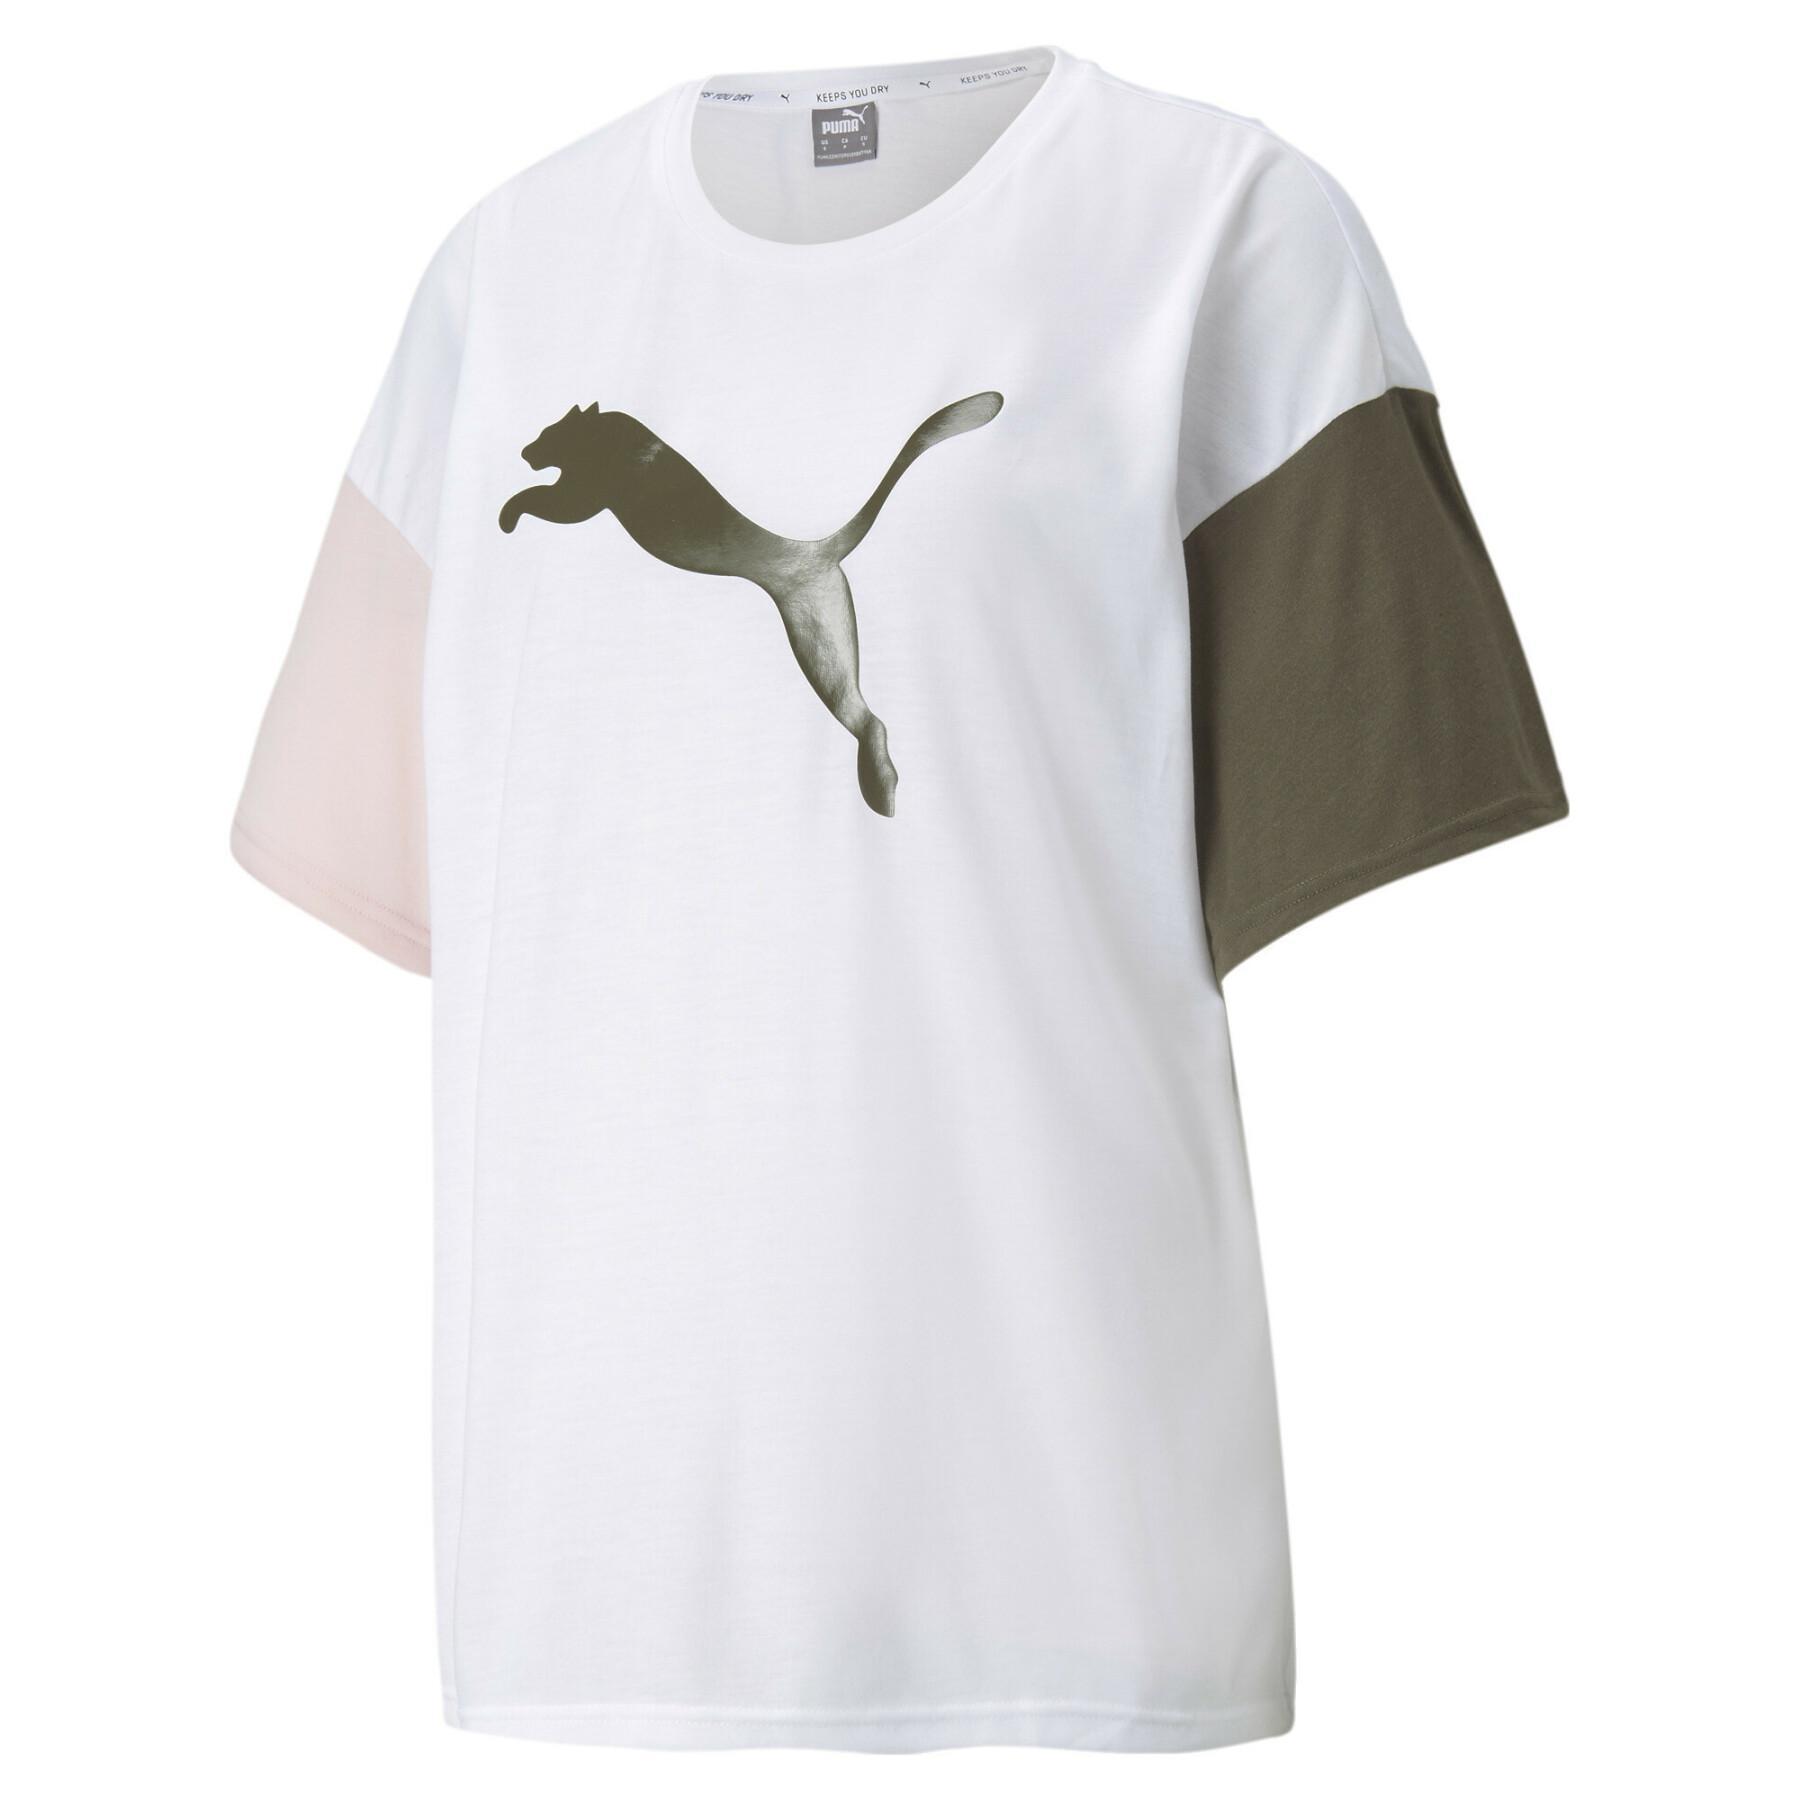 Women's T-shirt Puma Modern Sports Fashion